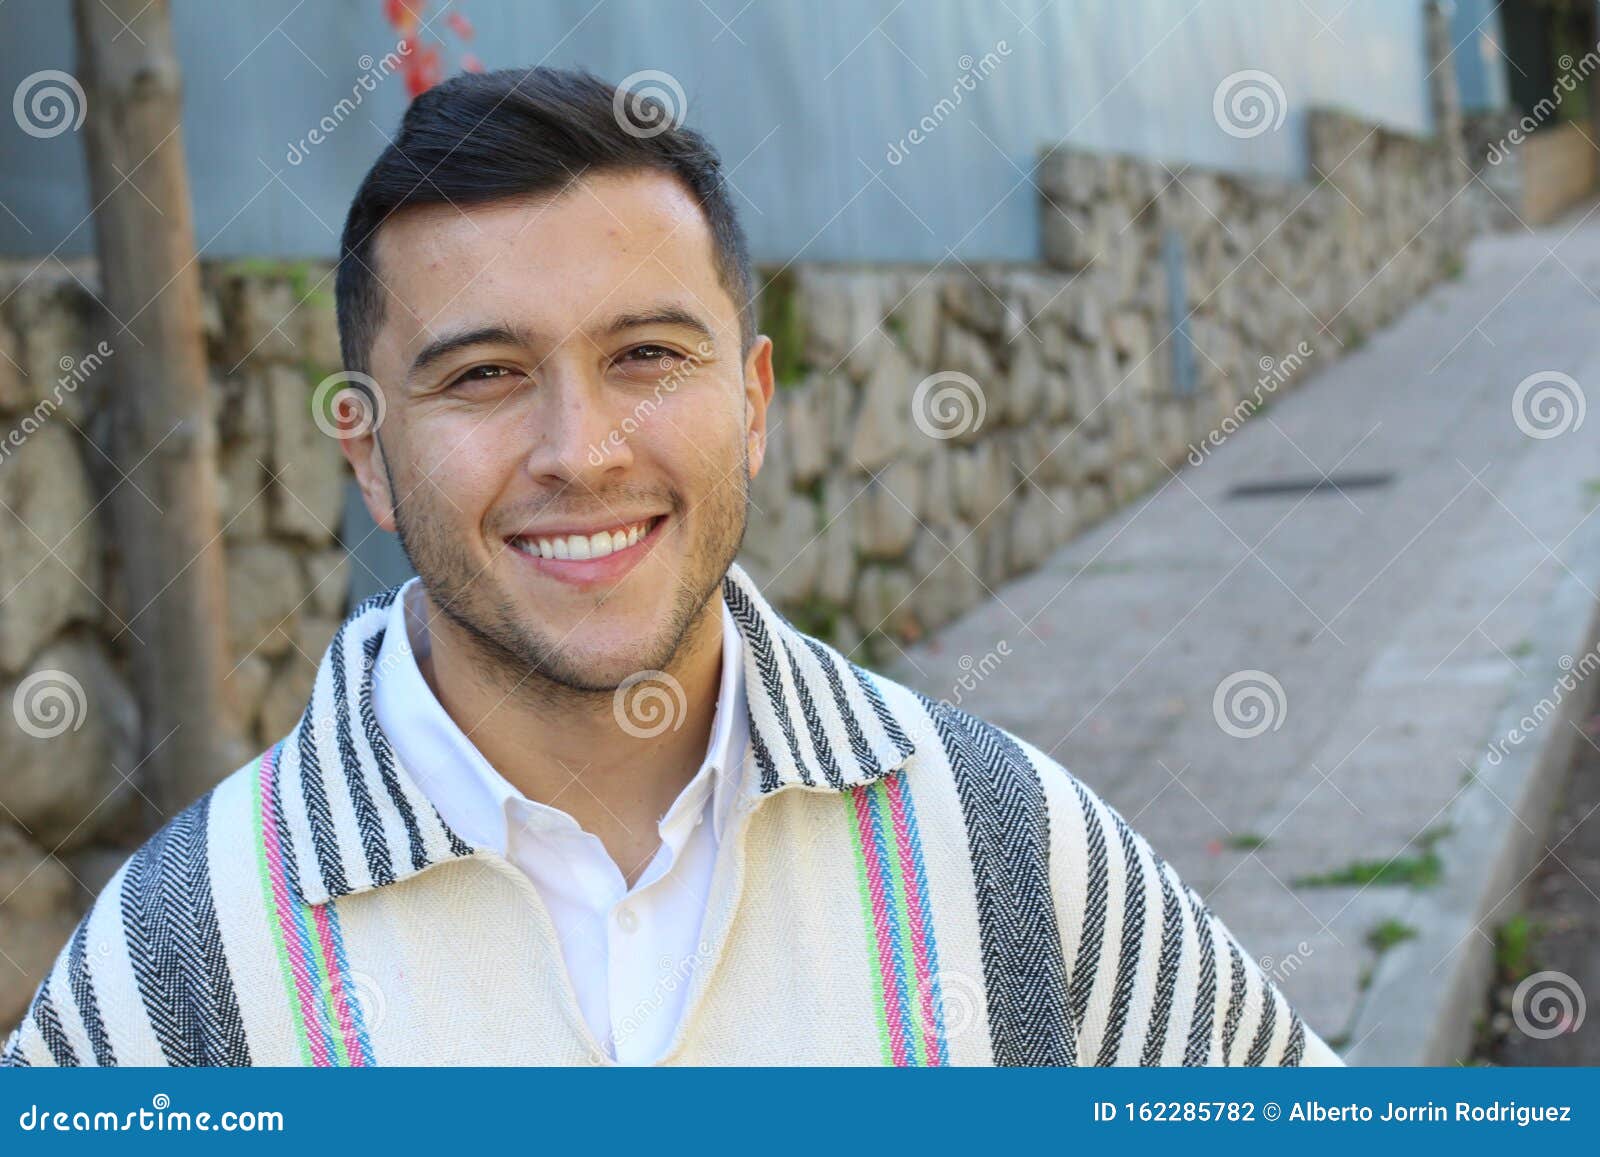 good looking hispanic man wearing a ruana